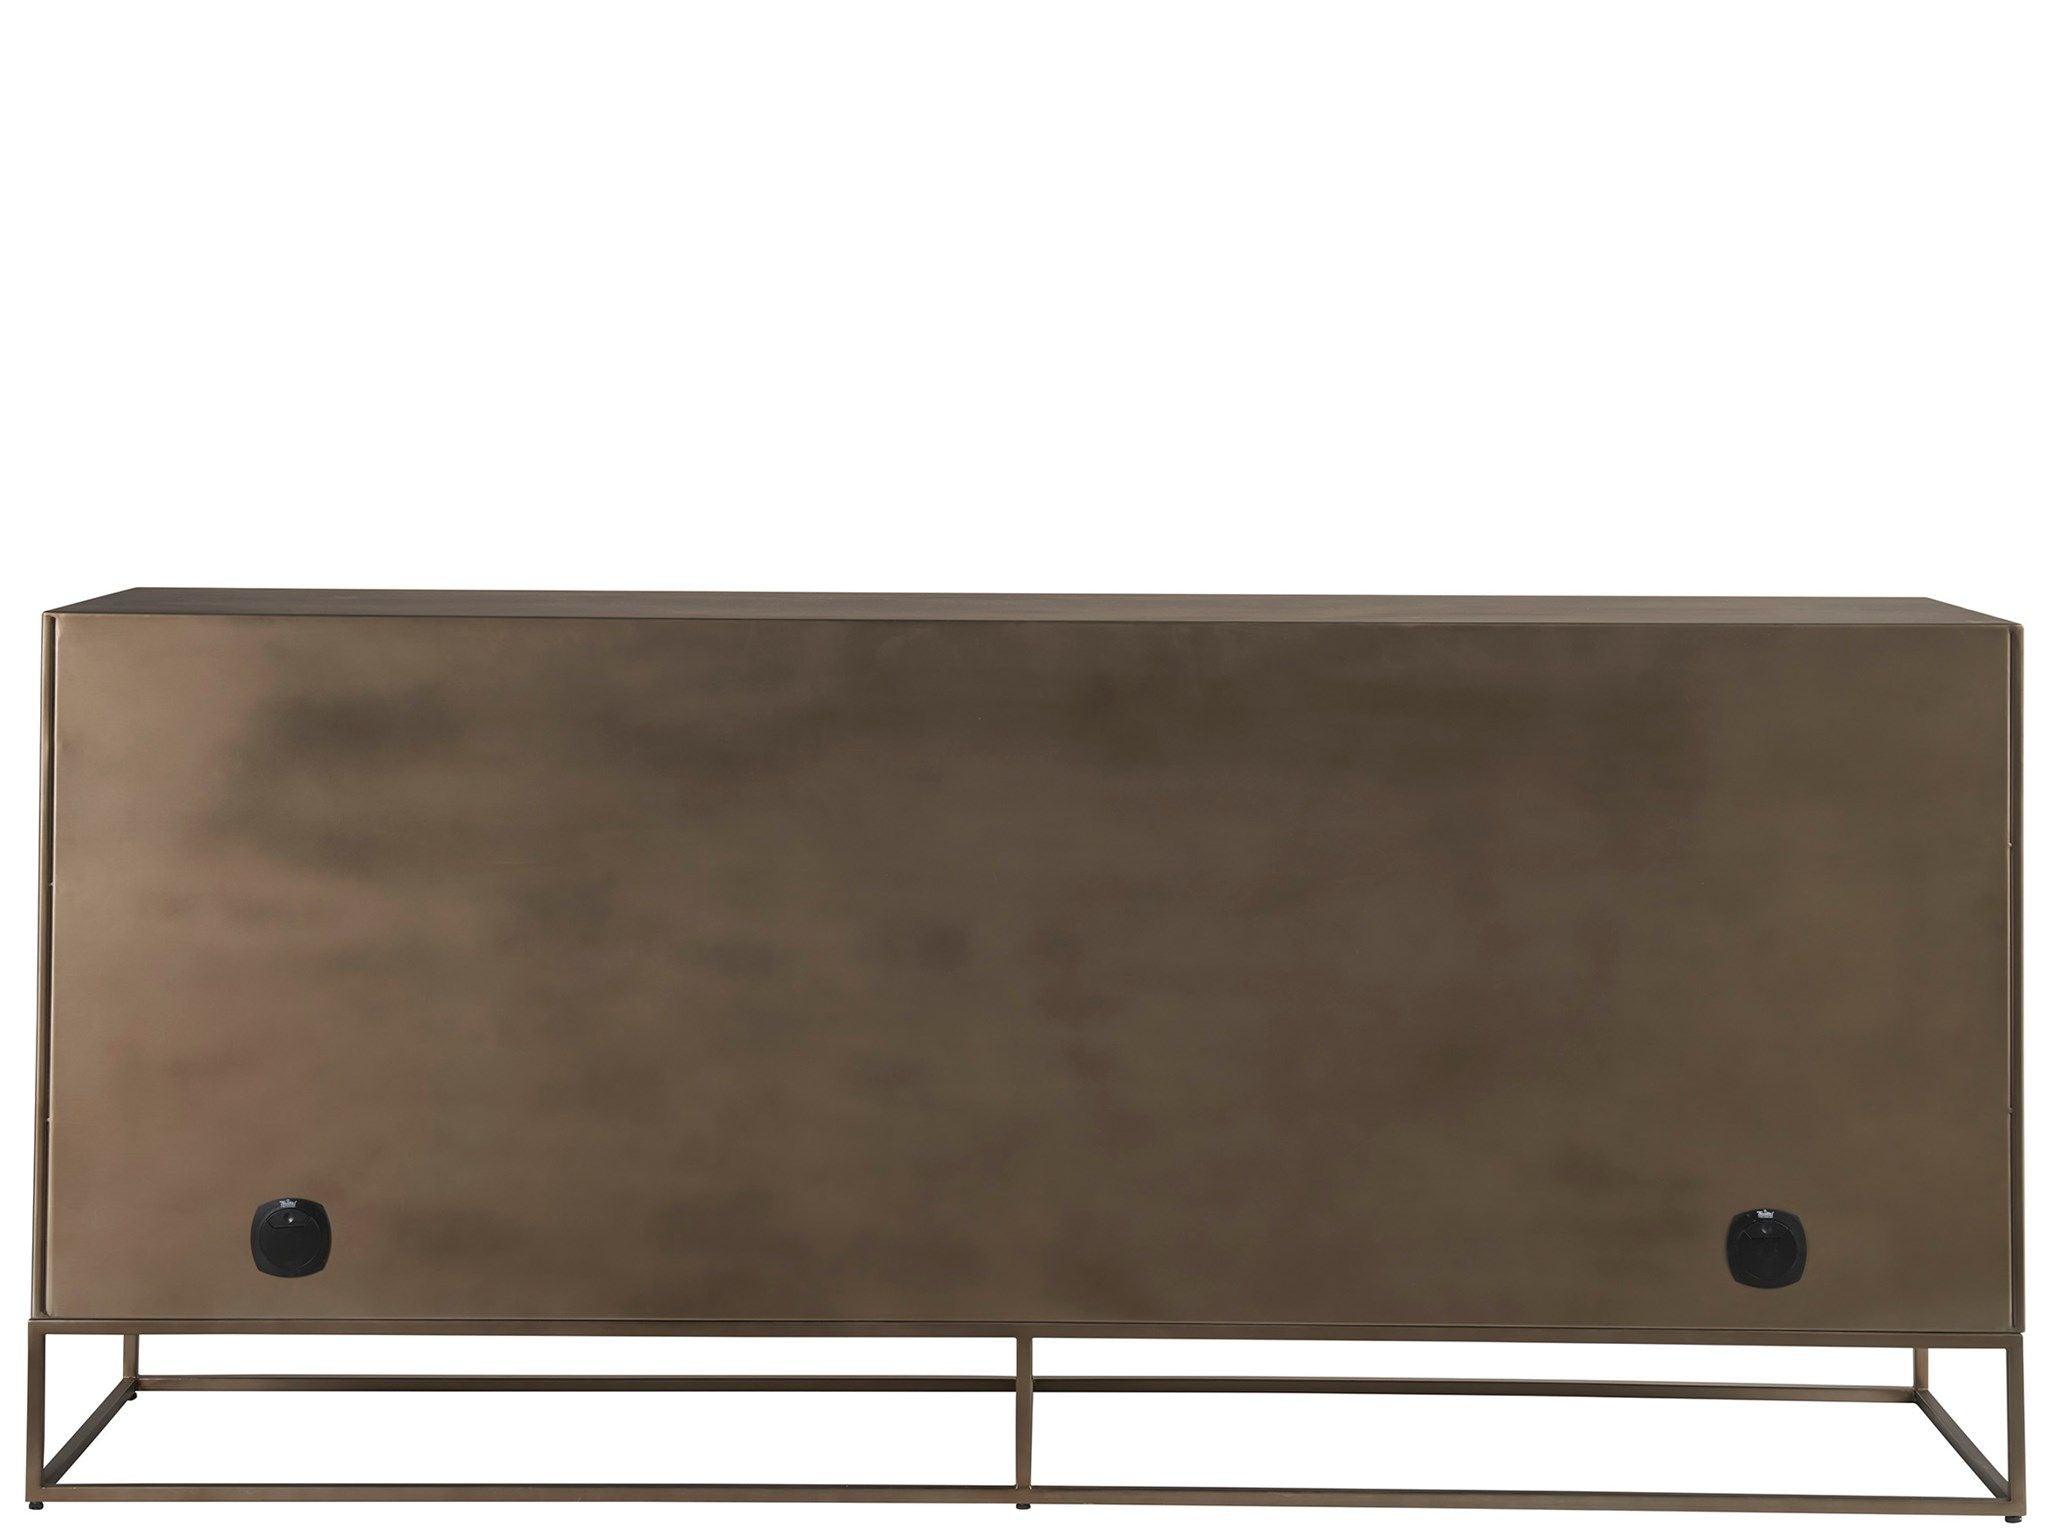 Universal Furniture - New Modern - Fusion Credenza - Bronze - 5th Avenue Furniture